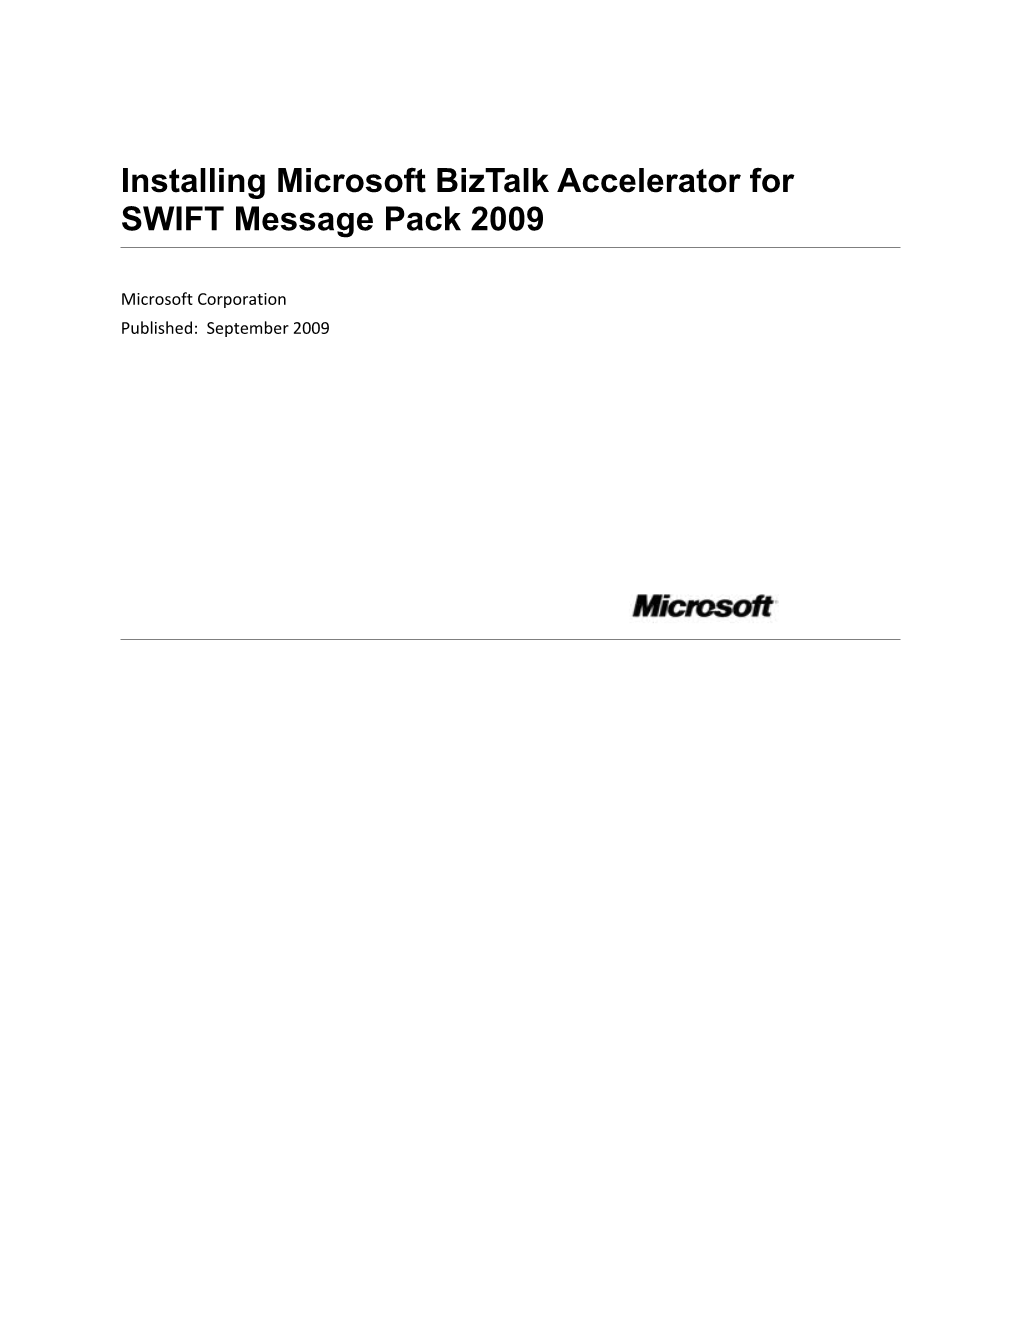 Installing Microsoft Biztalk Accelerator for SWIFT 2008 Message Pack